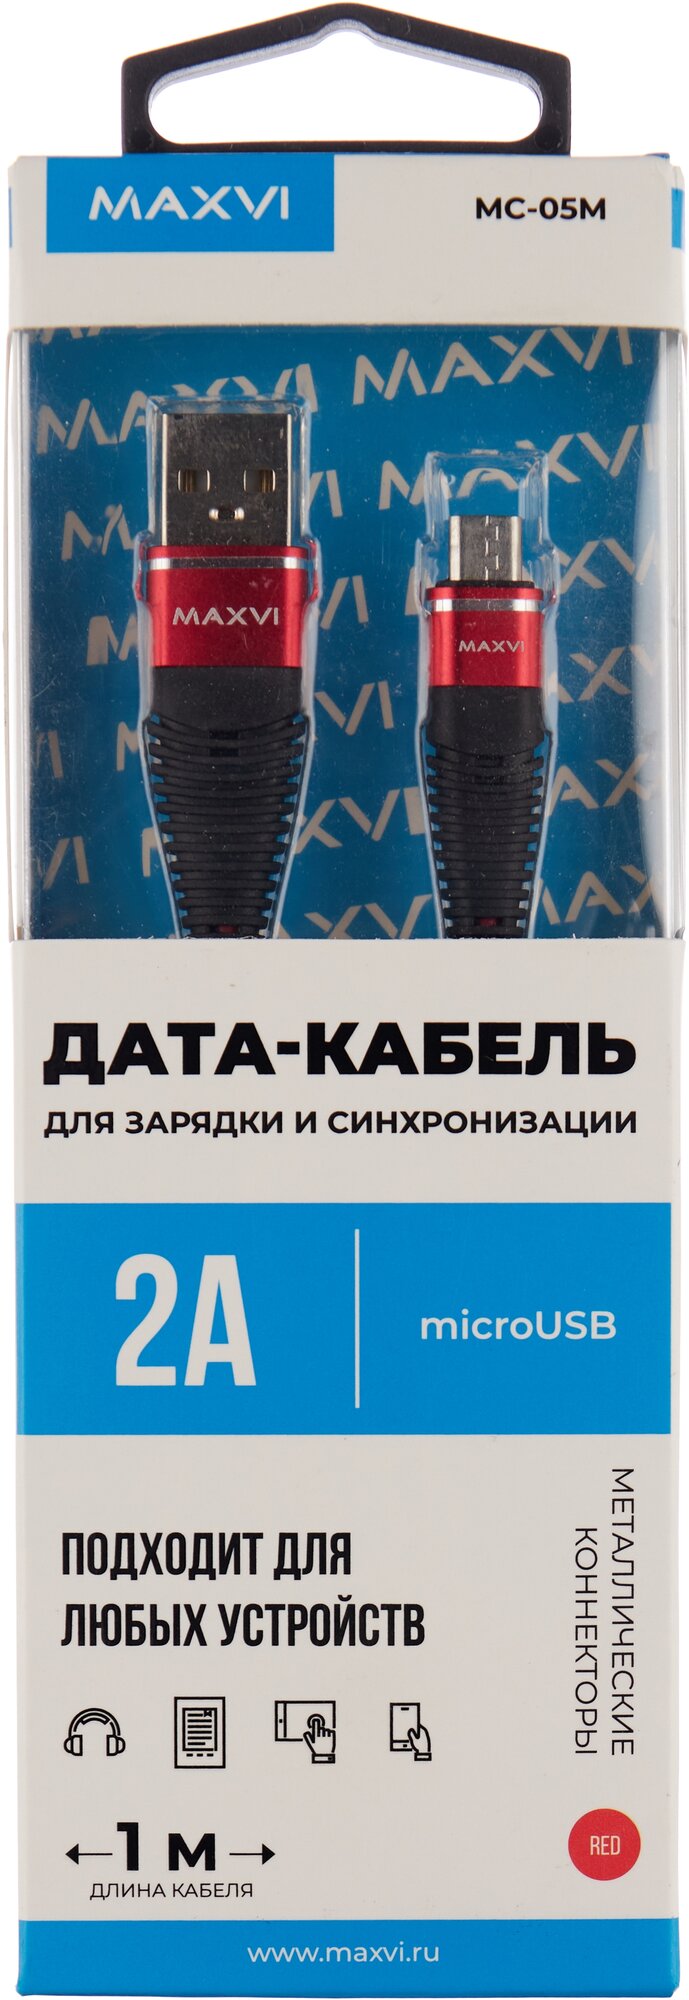 Кабель Maxvi MC-05M red USB-A - microUSB, 2A